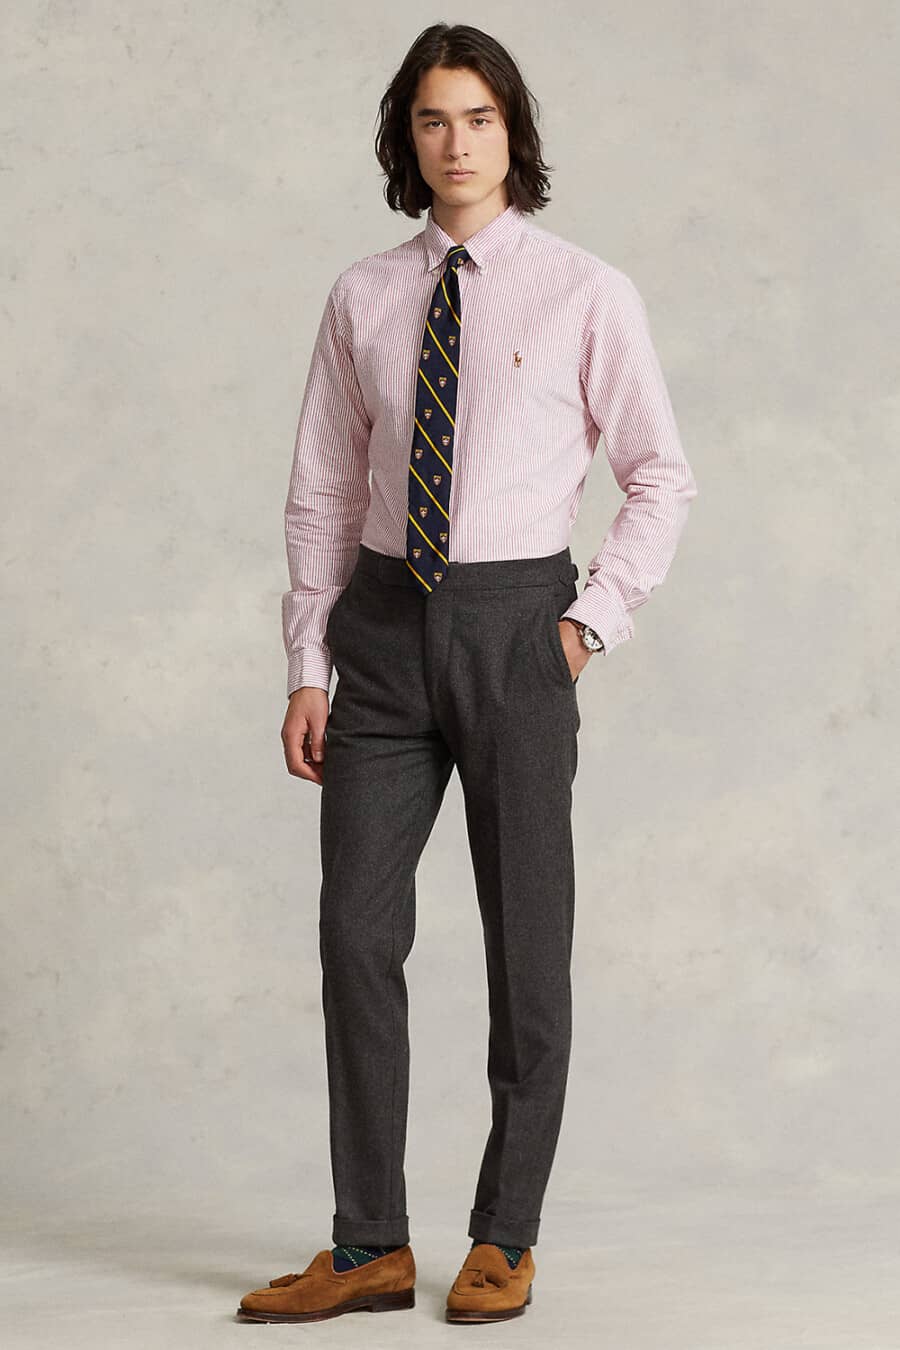 Men's Dark Grey Vest + Matching Dress Pants Set + Any Color-mncb.edu.vn